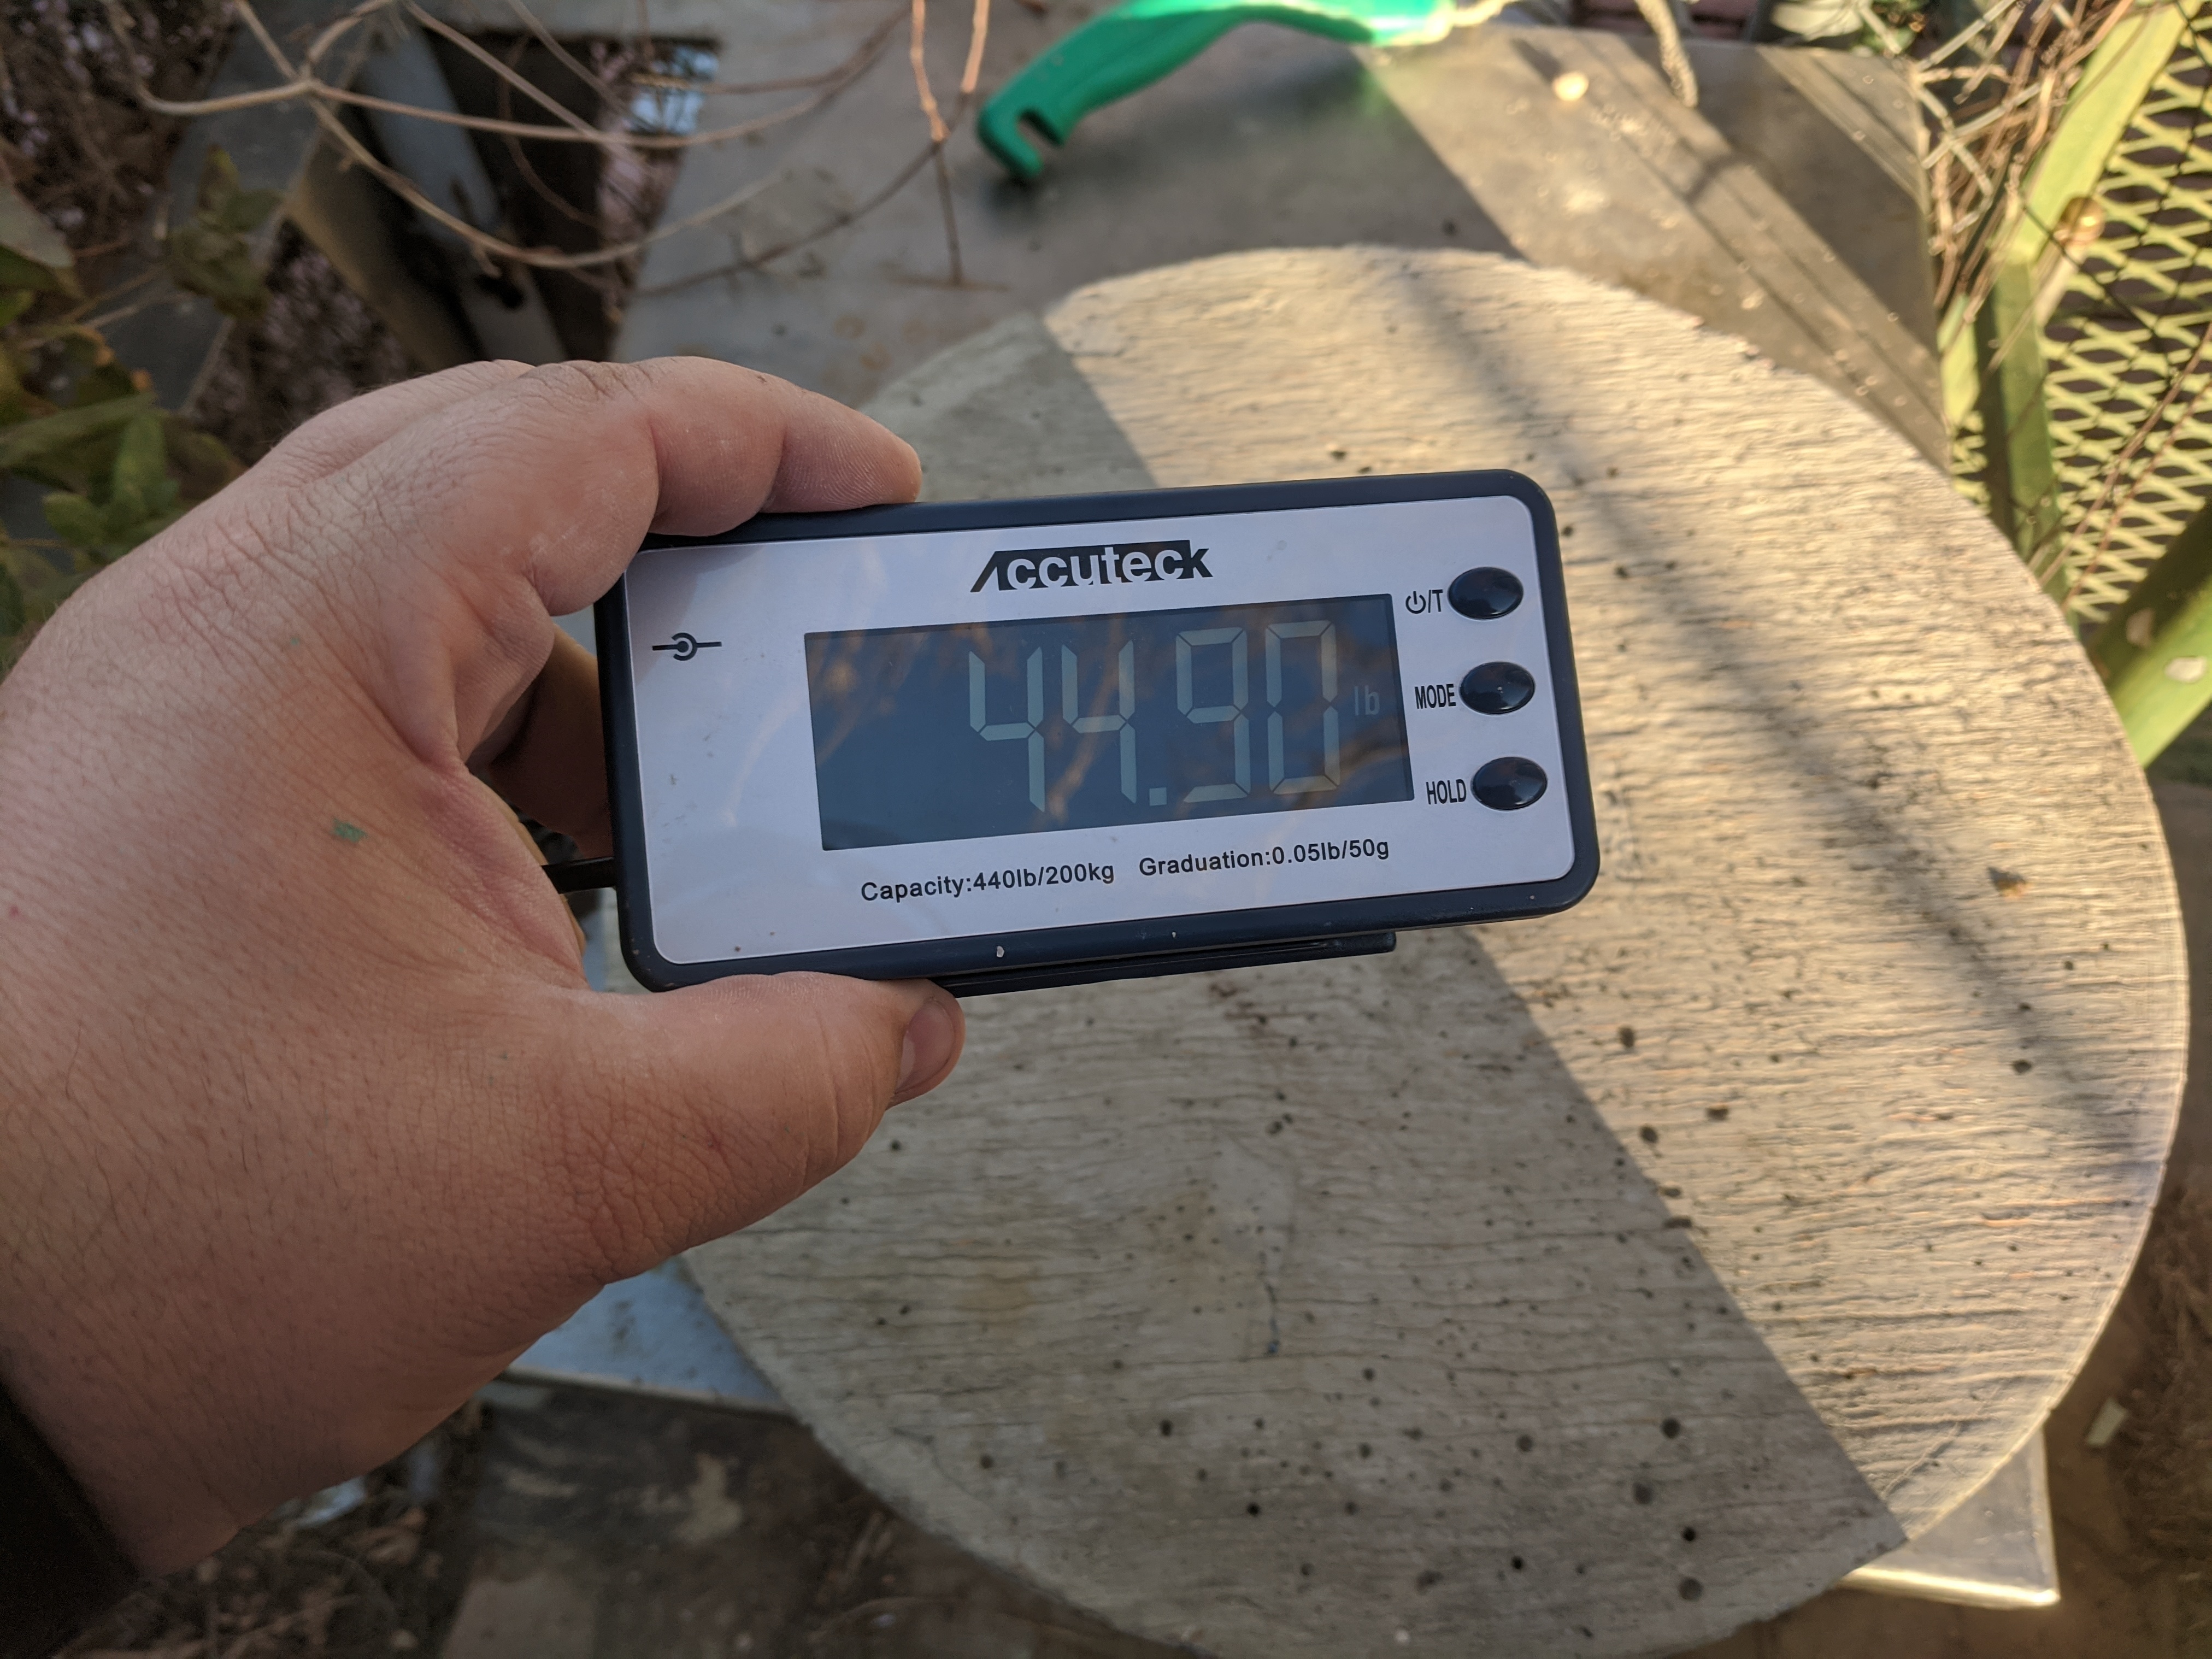 Termometro Daytona digitale